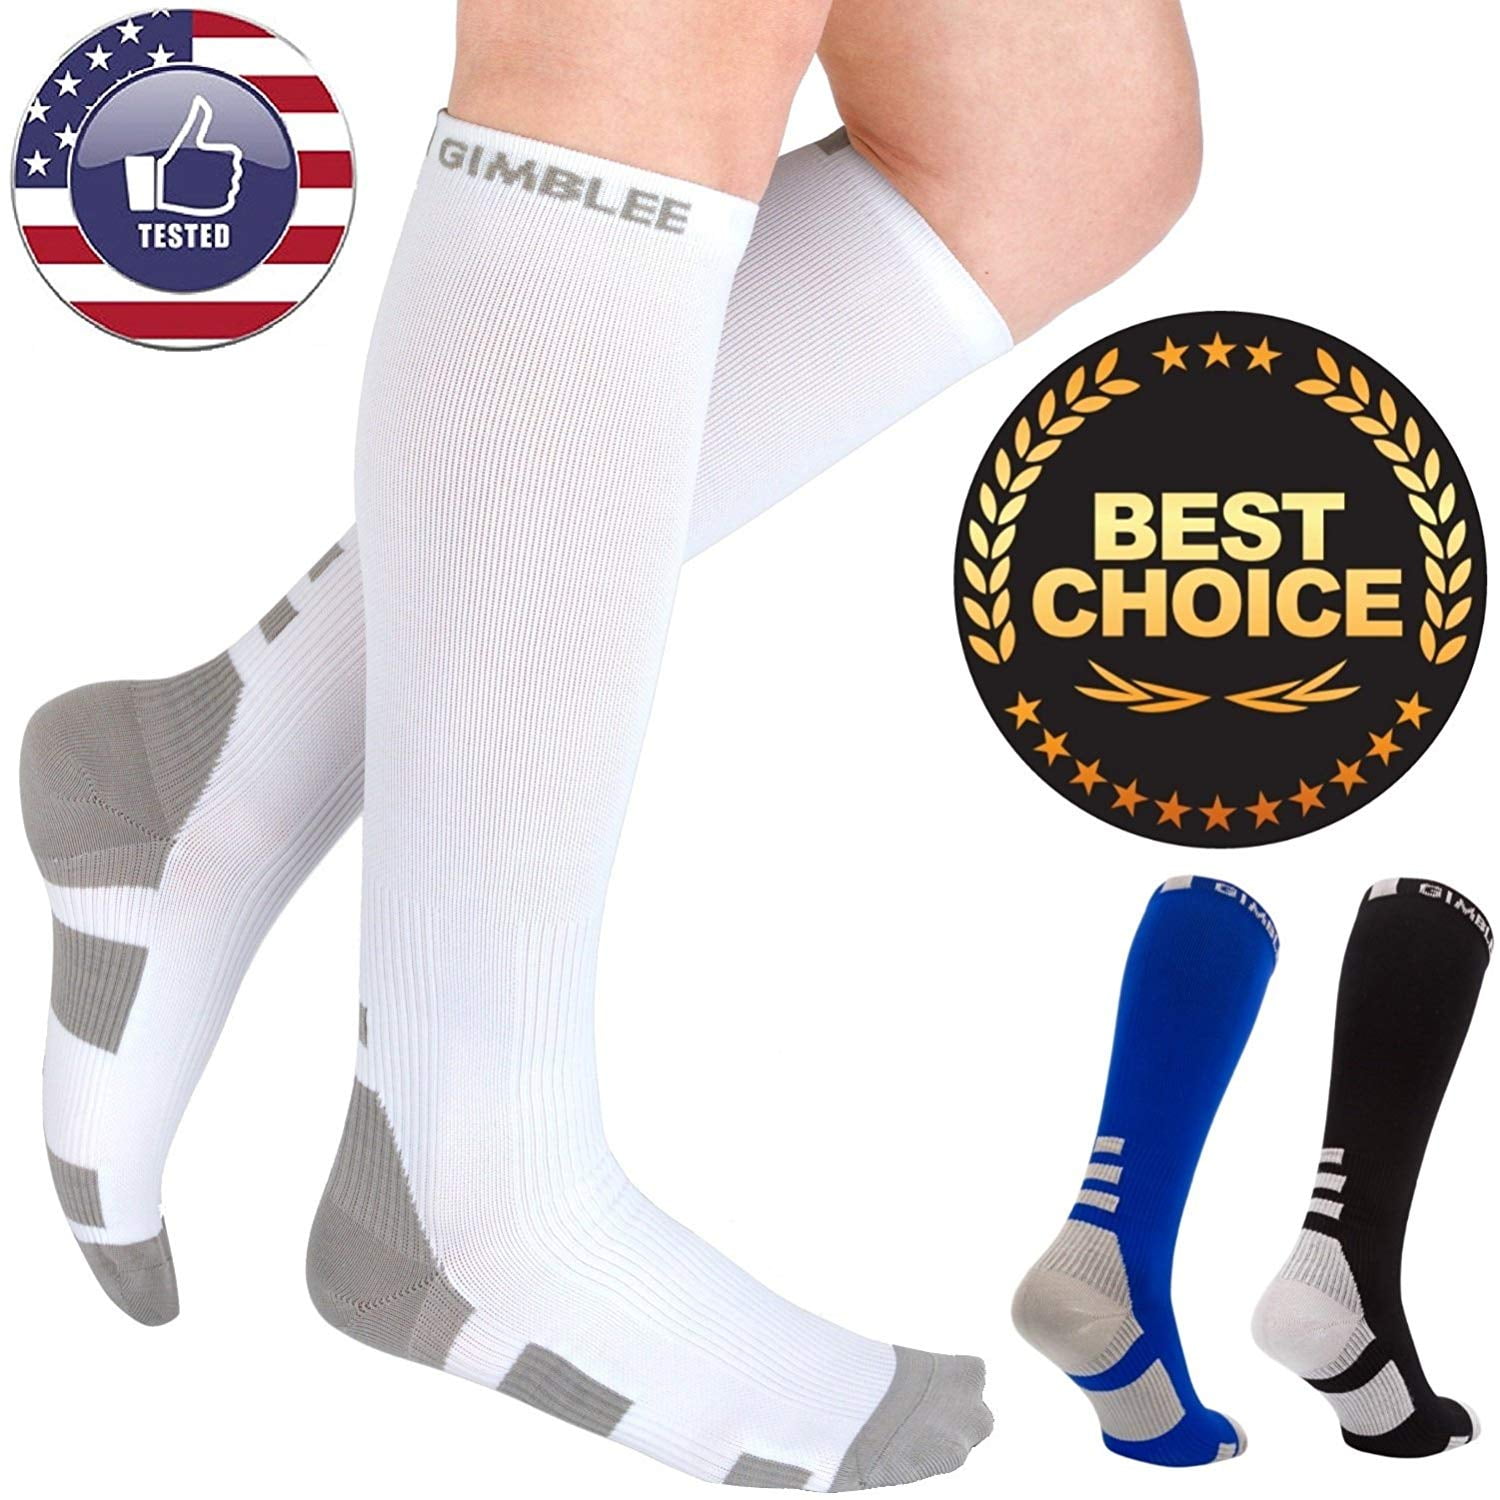 Gimblee Compression Socks - Stockings Women Men - Best Nurse - Long ...